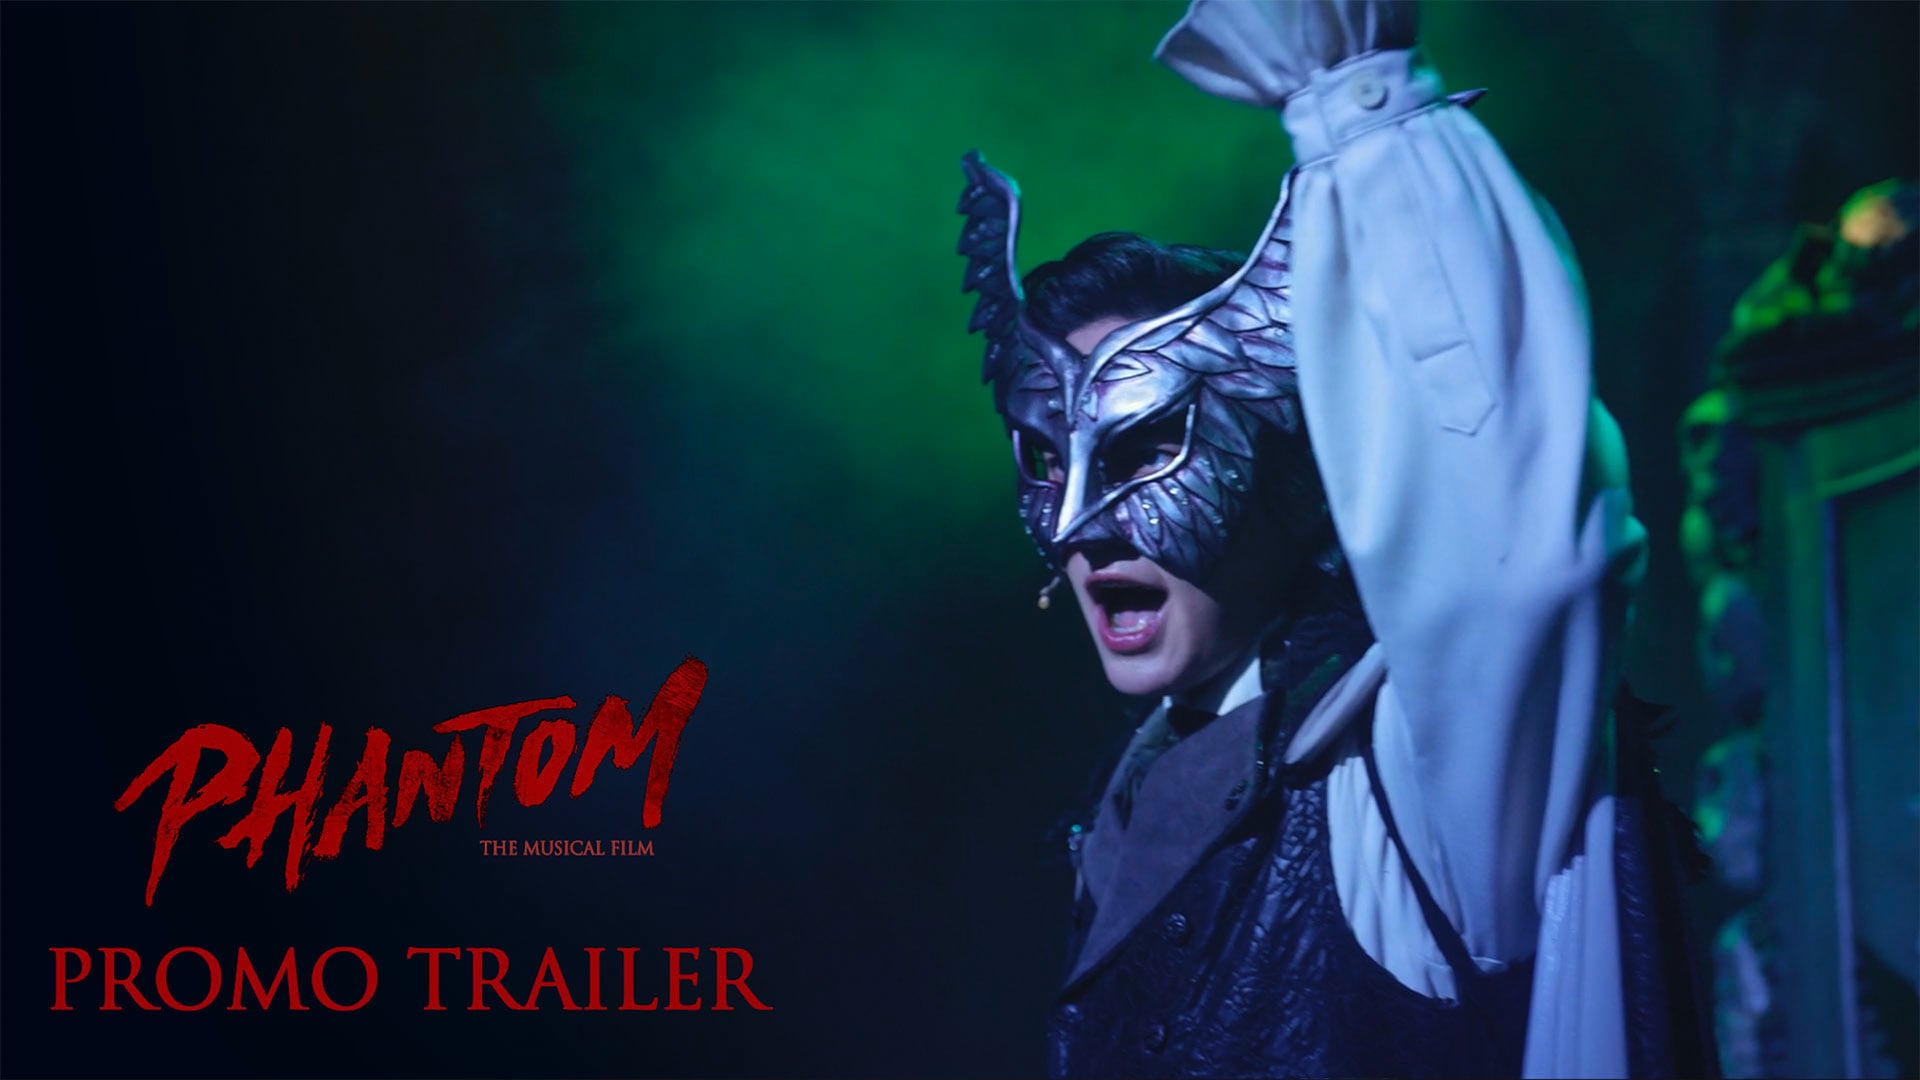 Watch Phantom The Musical Trailer Online Vimeo On Demand on Vimeo